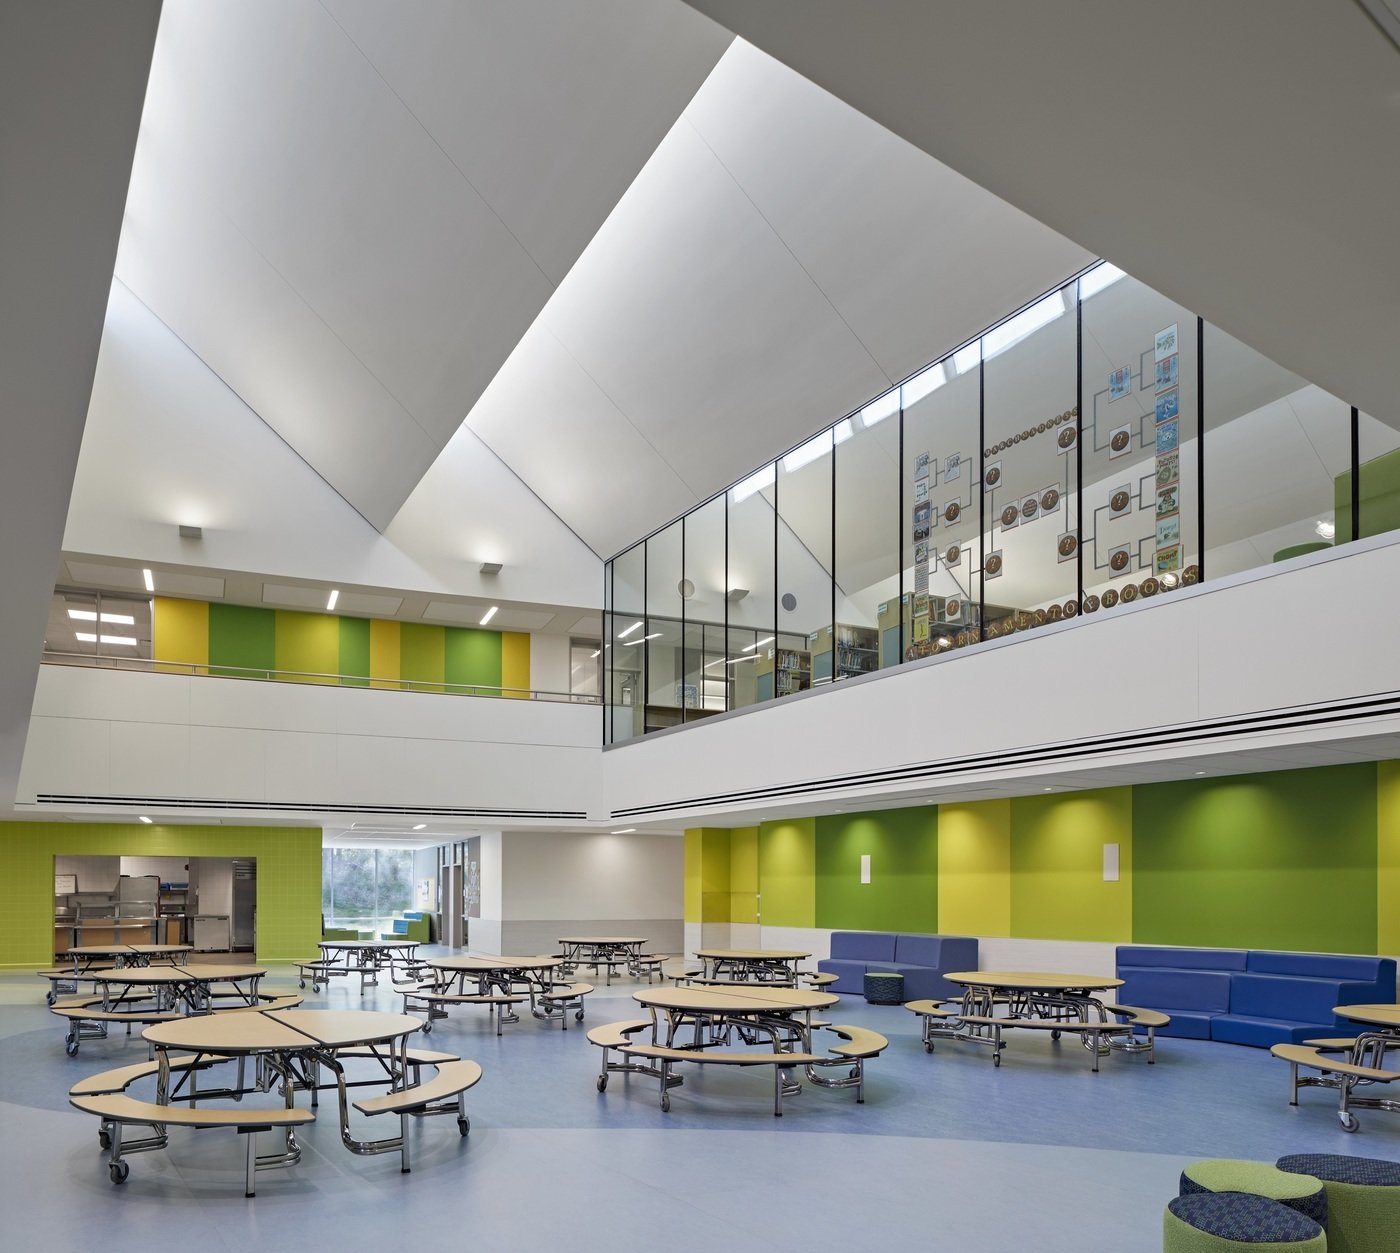 12 tskp greenwhich new lebanon elementary school flexible interior cafeteria 1400 xxx q85